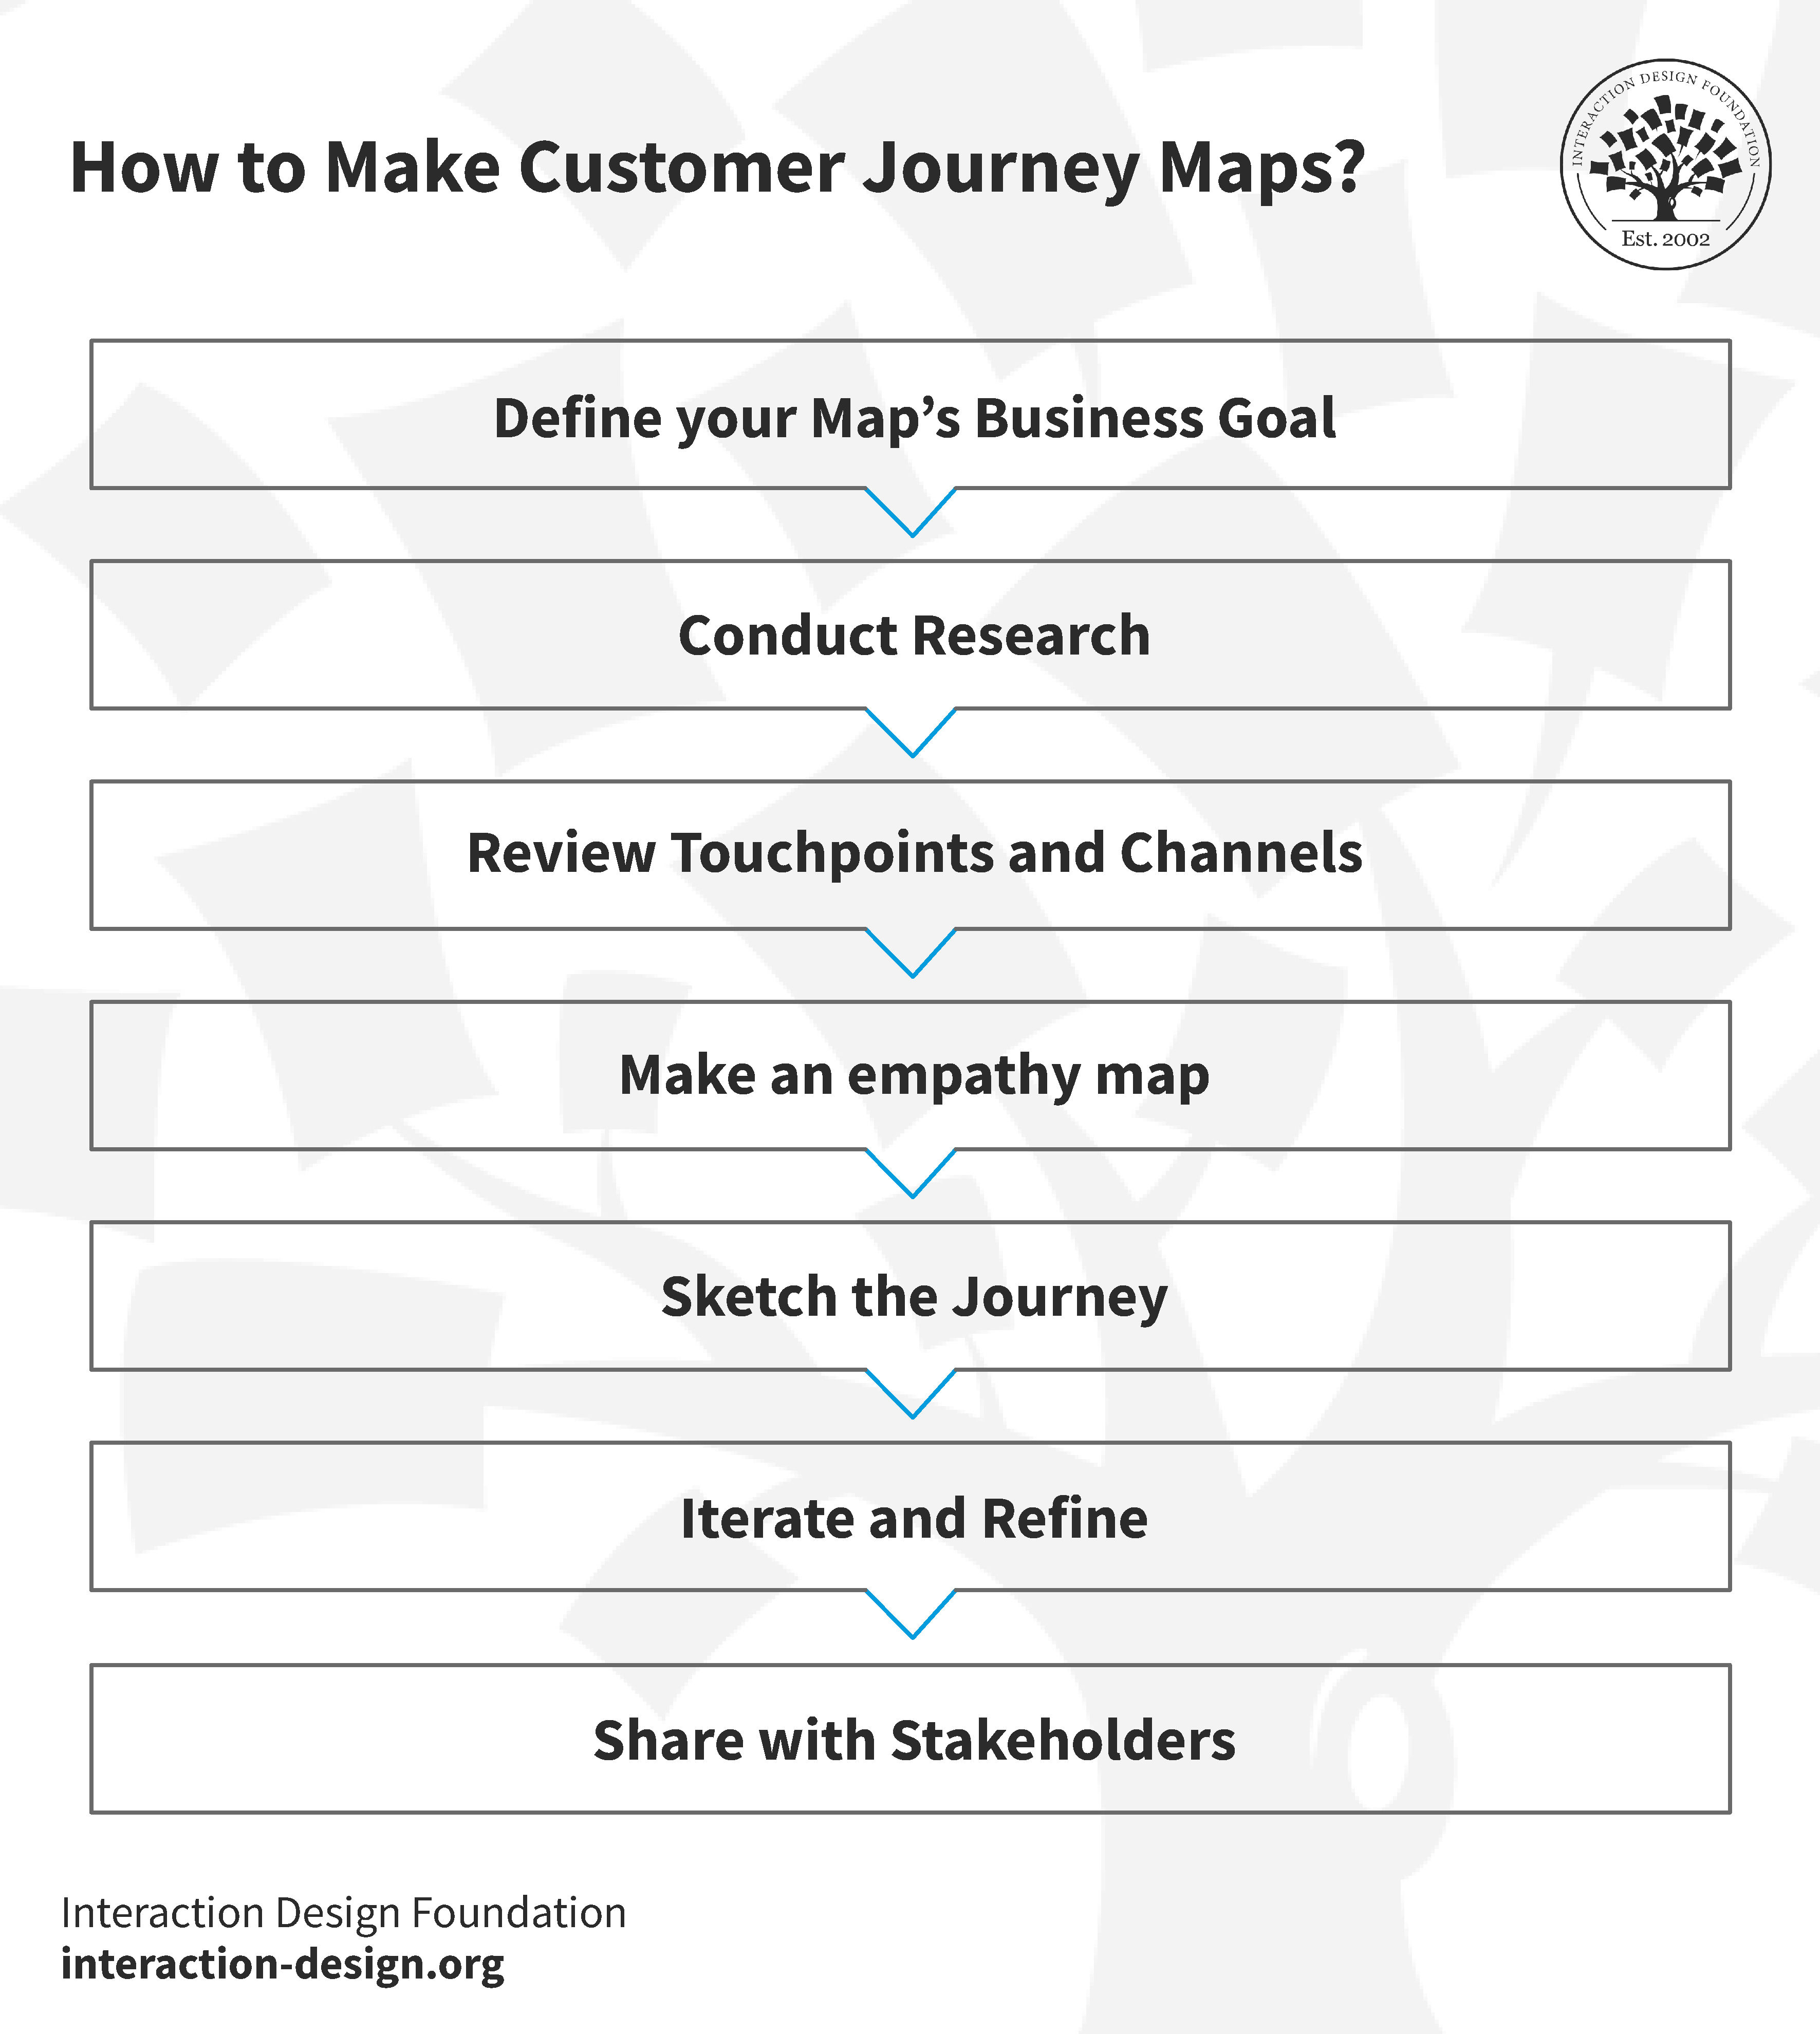 Create a Custom Journey